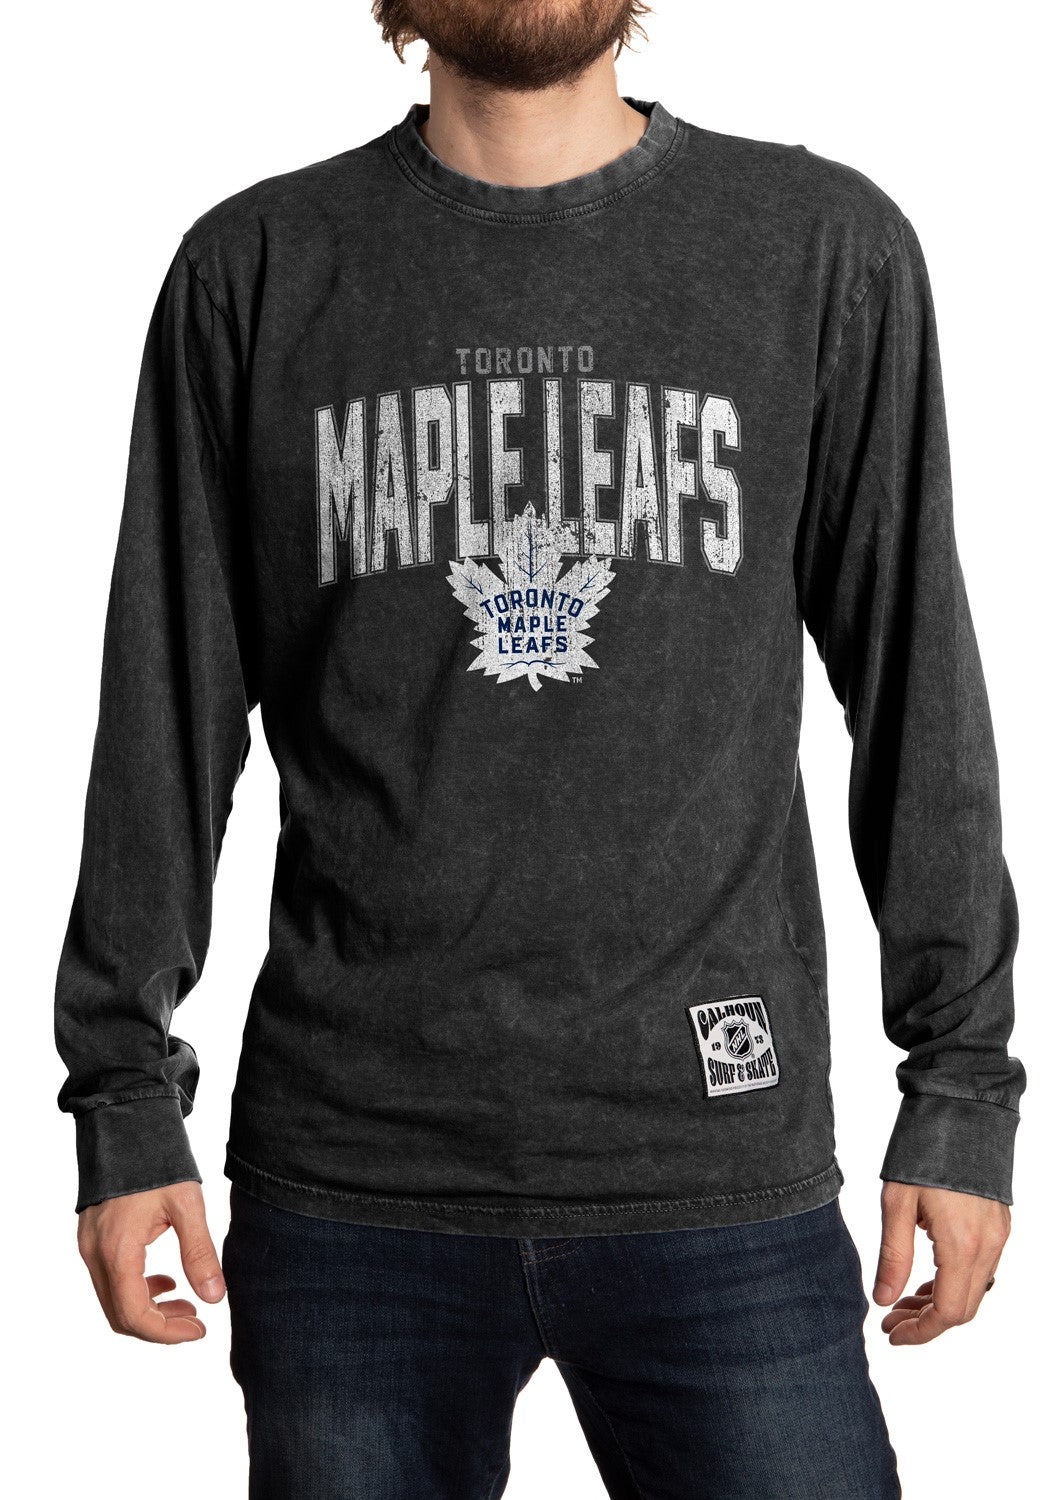 Premium toronto Maple leafs X drew house shirt, sweater and hoodie